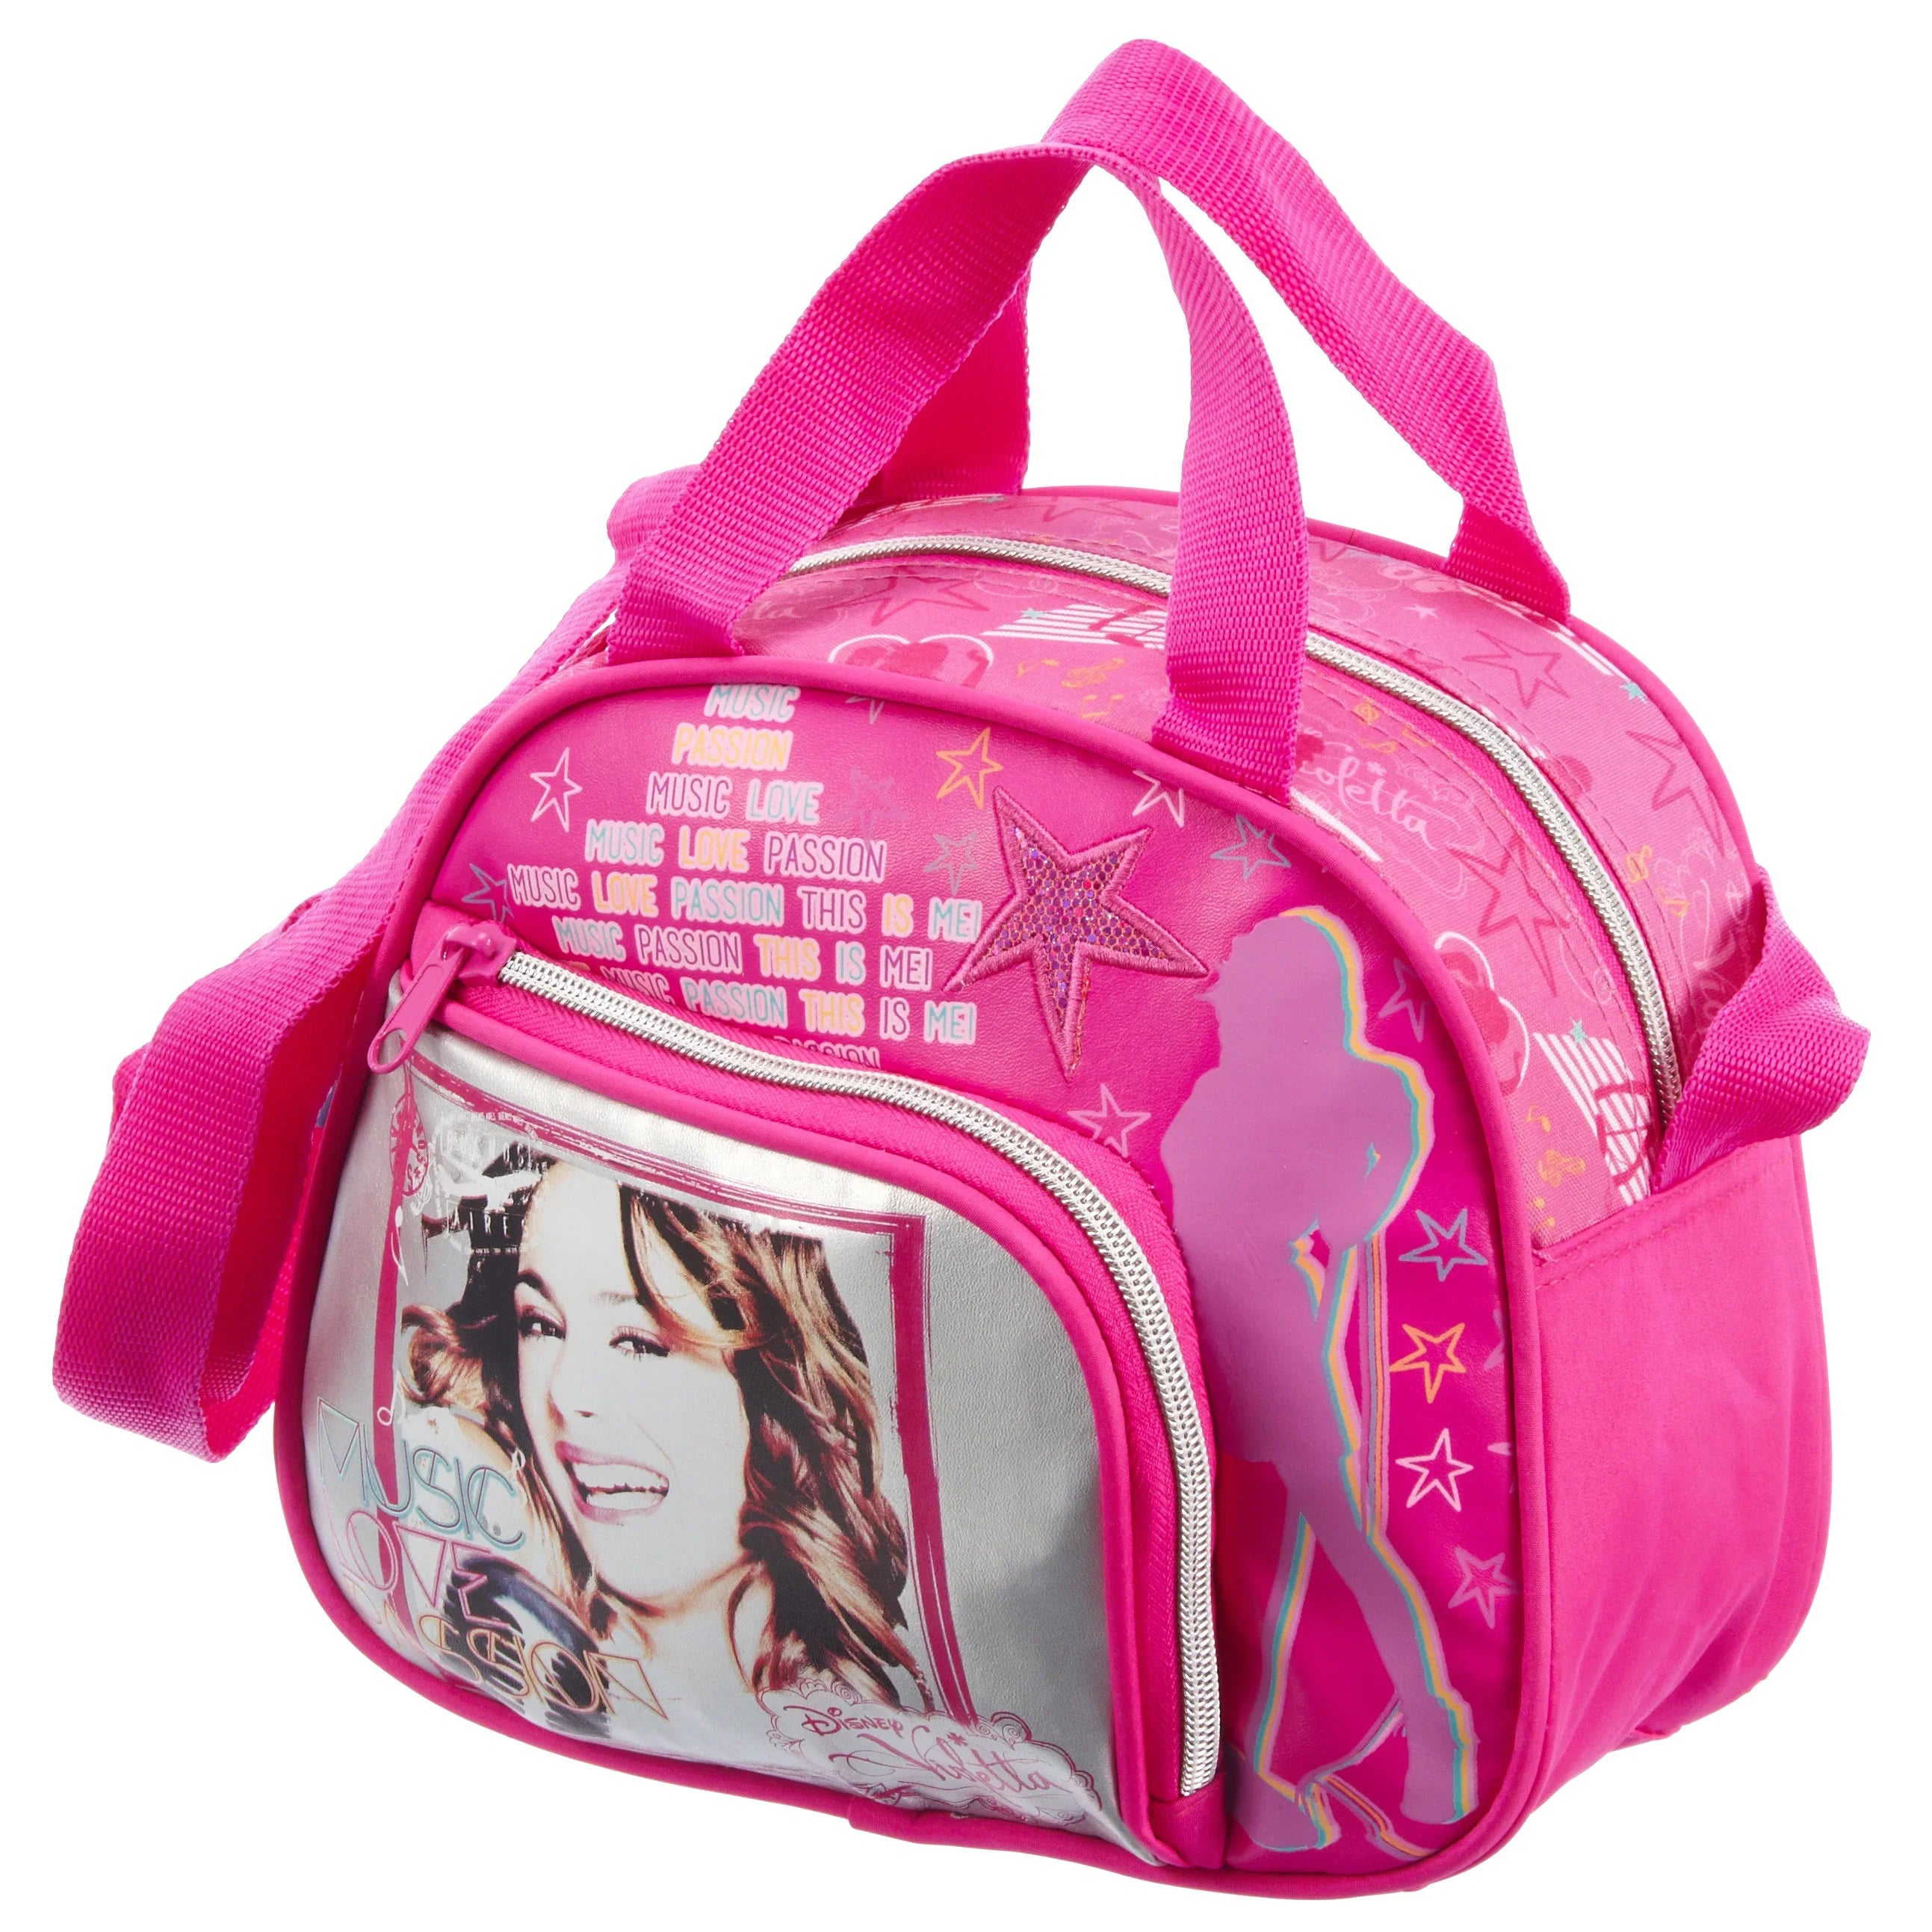 Disney Violetta Star Beauty Case with shoulder strap 23 cm - pink